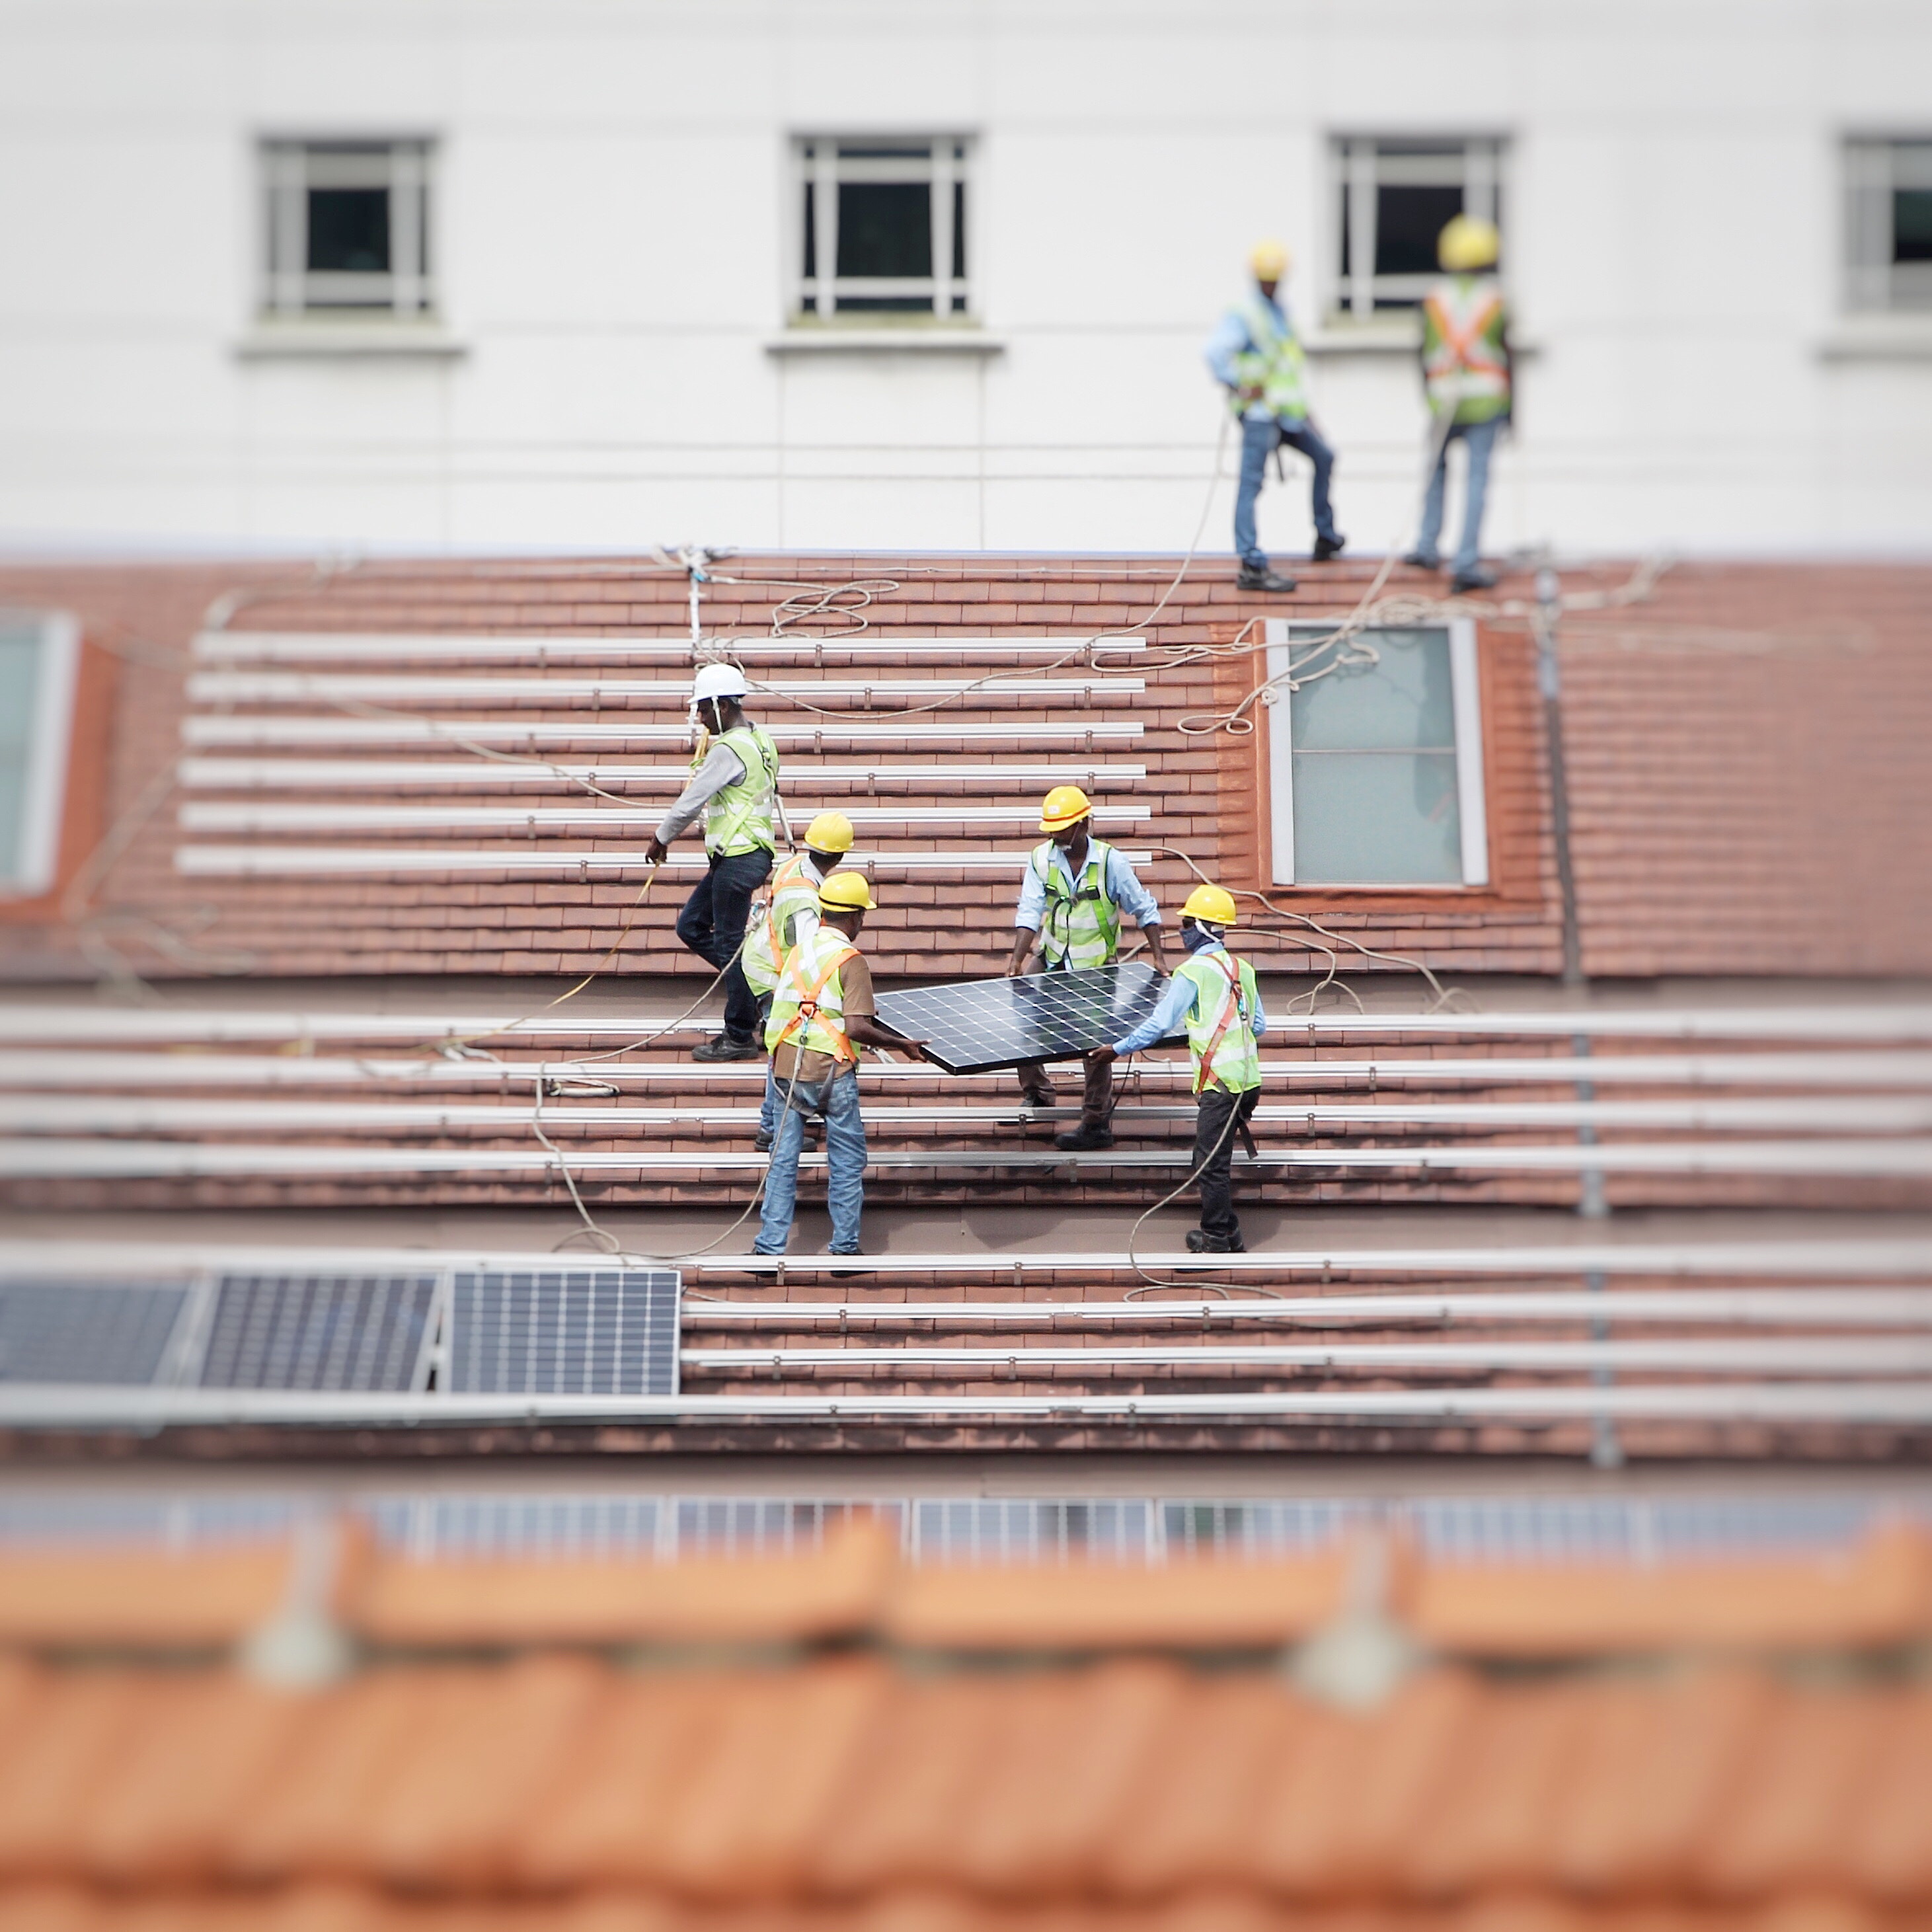 people in high-viz jackets install solar panel